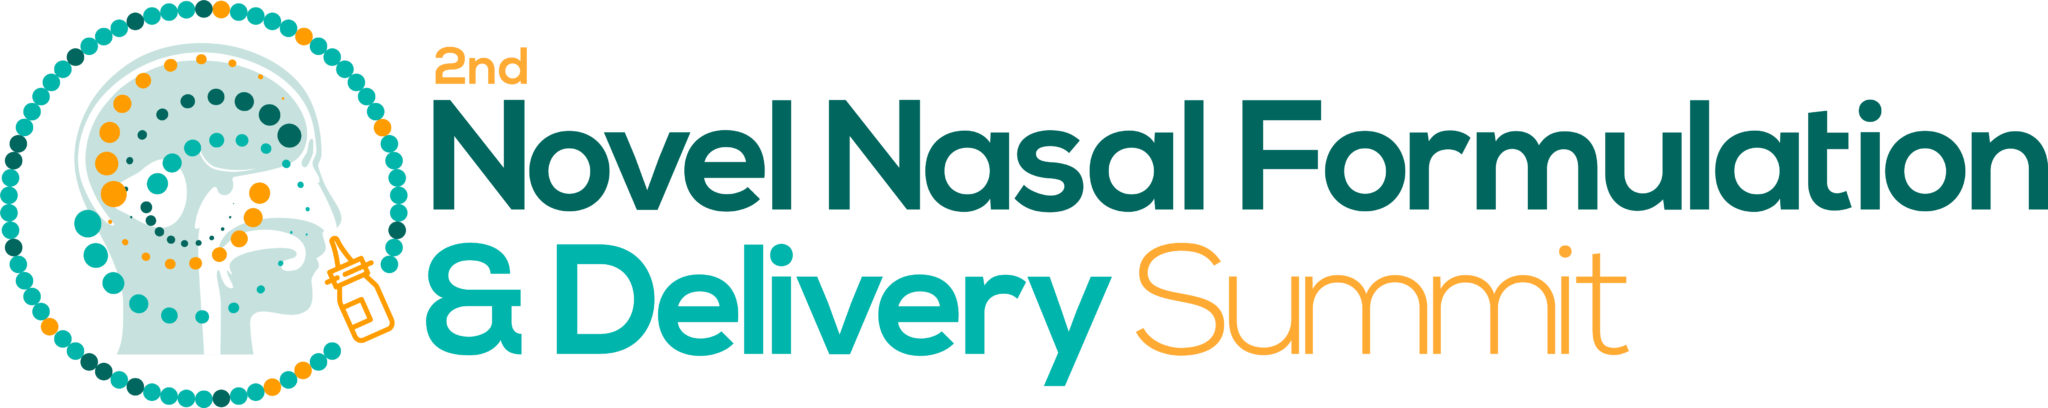 novel nasal